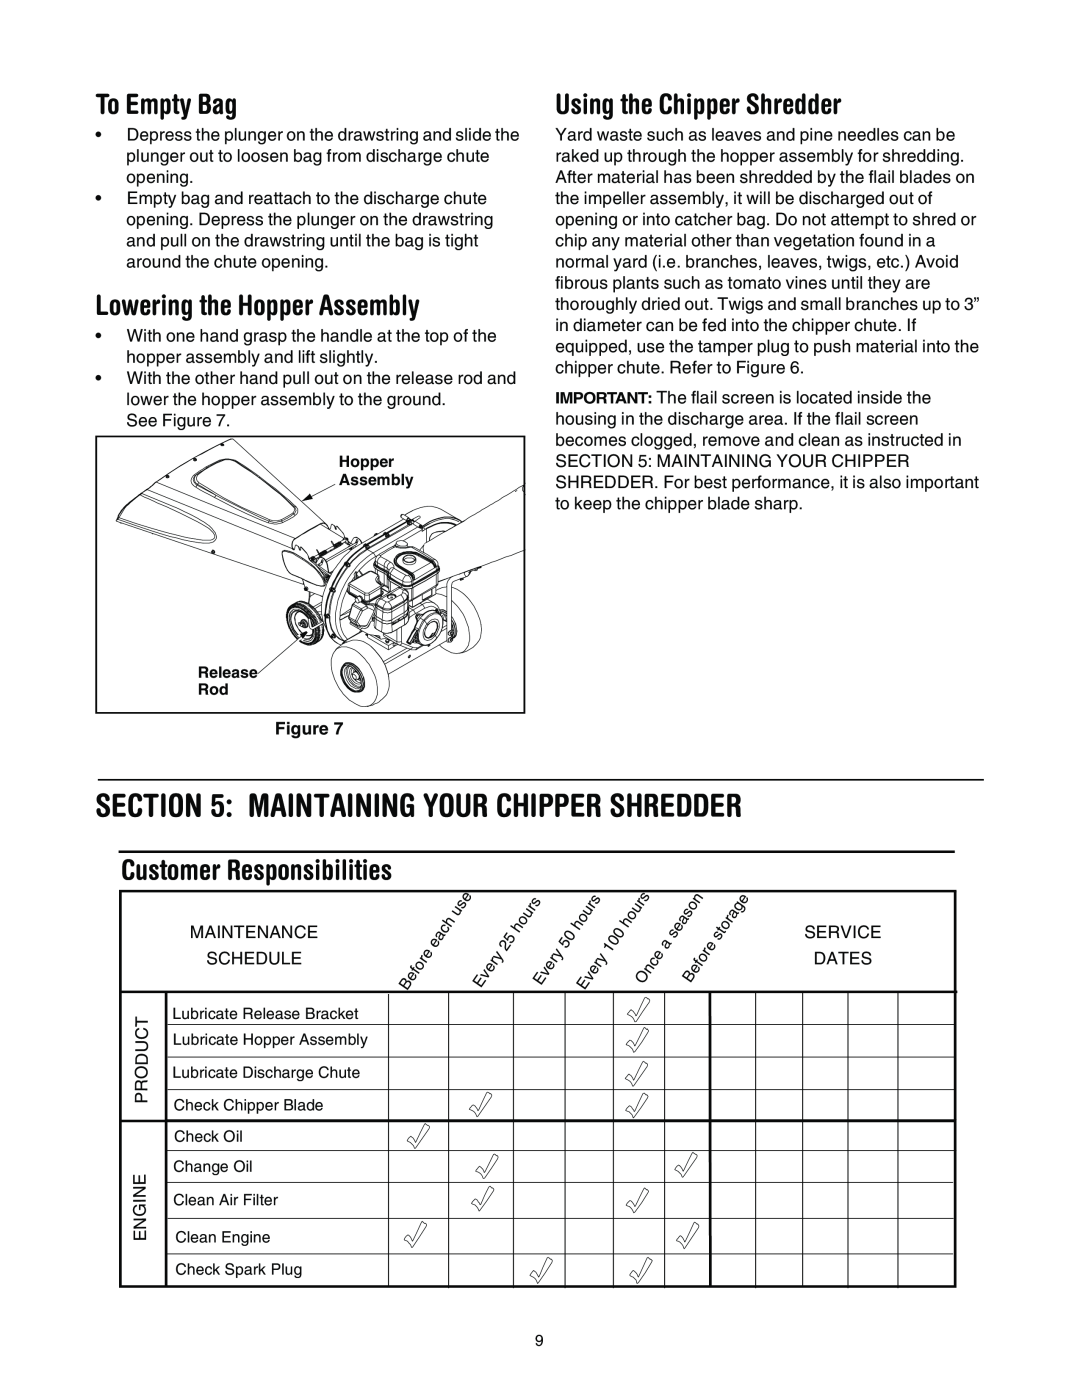 Troy-Bilt 494 manual To Empty Bag, Lowering the Hopper Assembly, Using the Chipper Shredder, Customer Responsibilities 